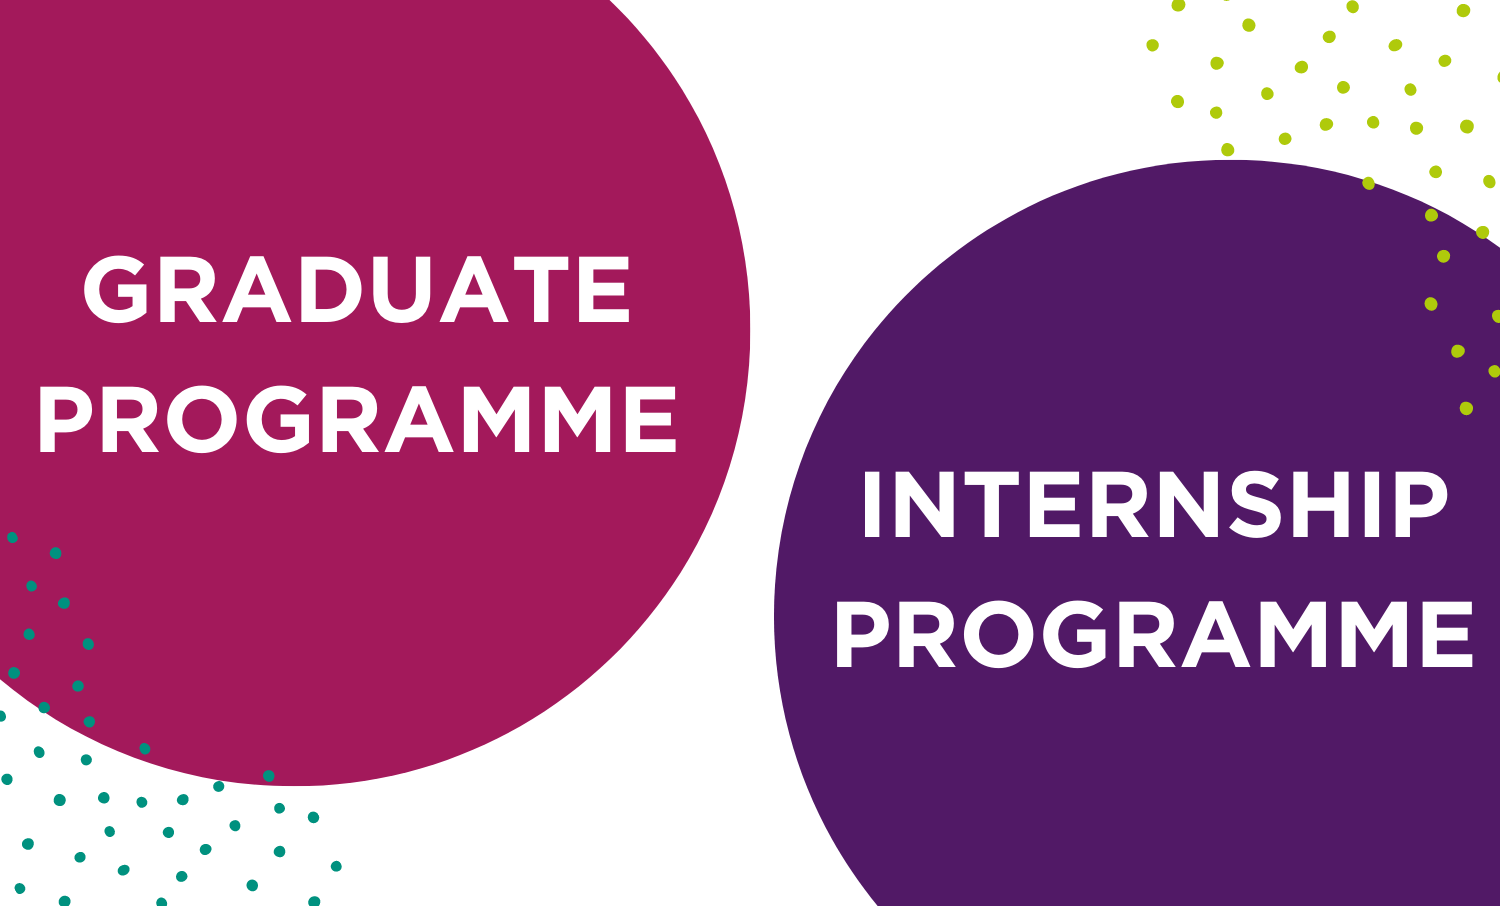 Graduate and Internship Programme